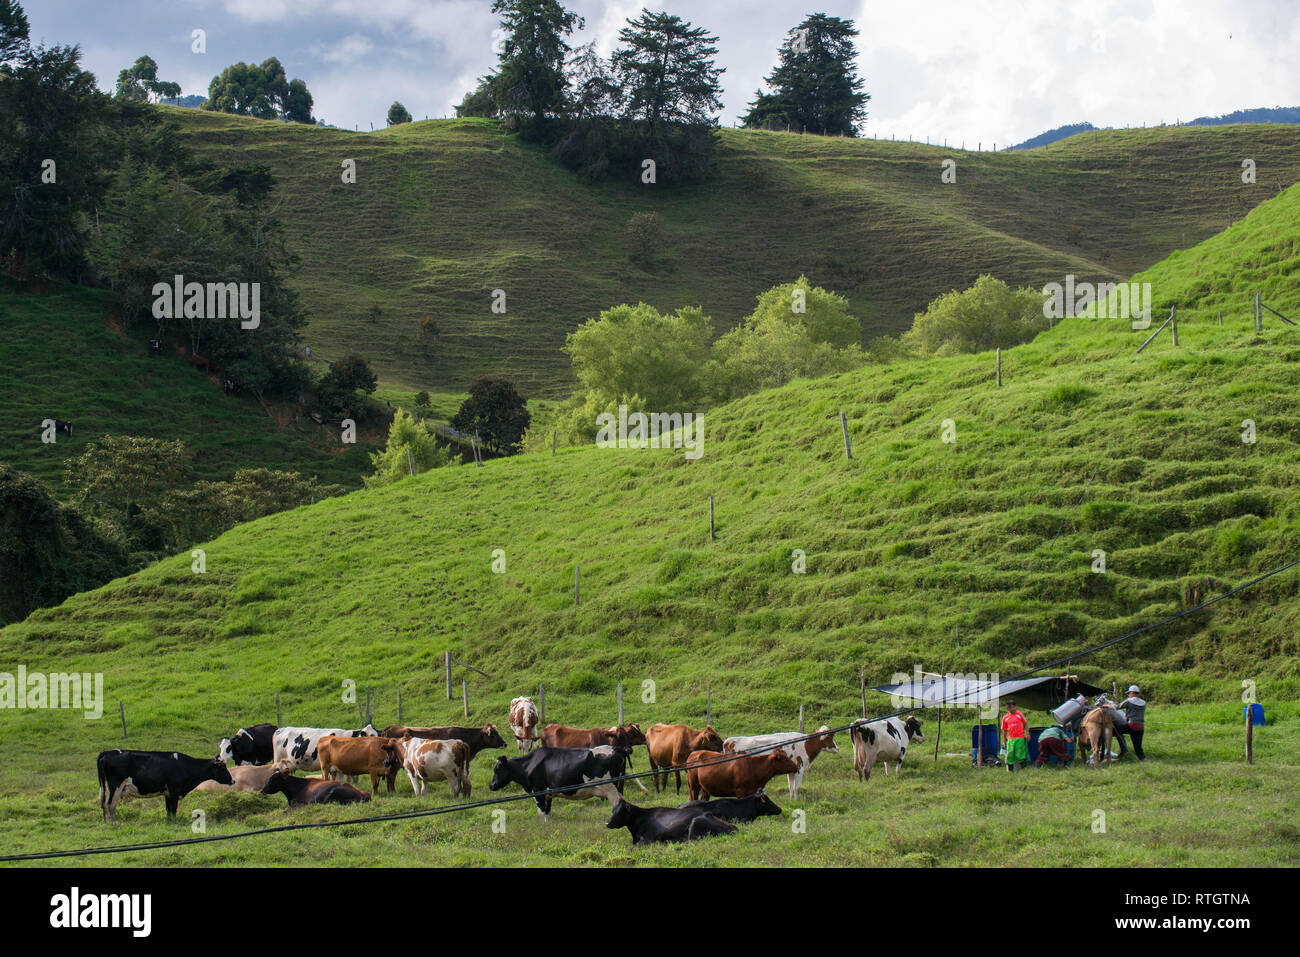 Donmatias, Antioquia, Colombia: Cowboy milk cows Stock Photo